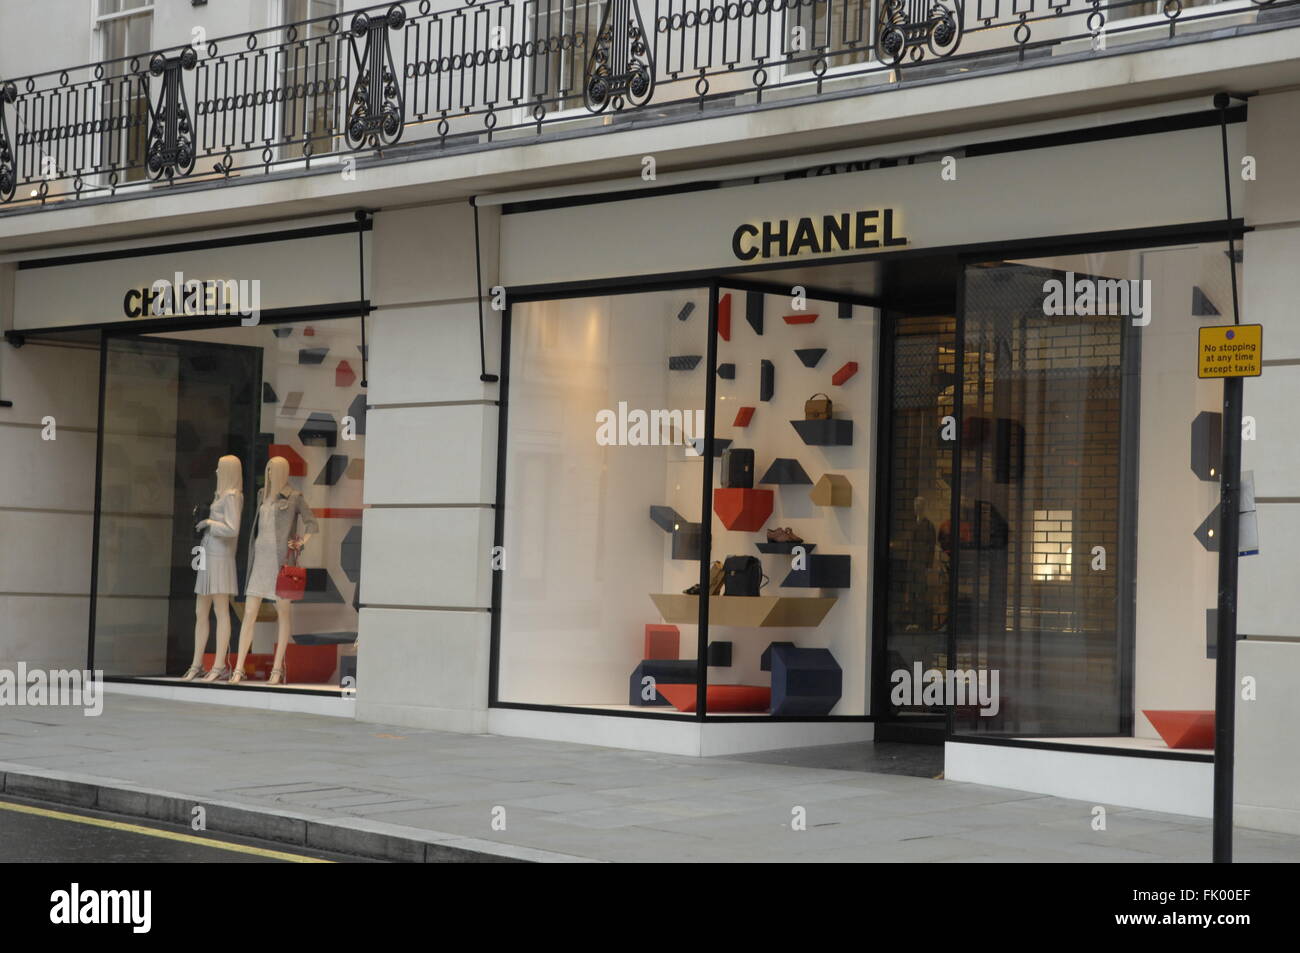 Chanel Showroom Shop Entrance in New Bond Street London UK Stock Photo ...